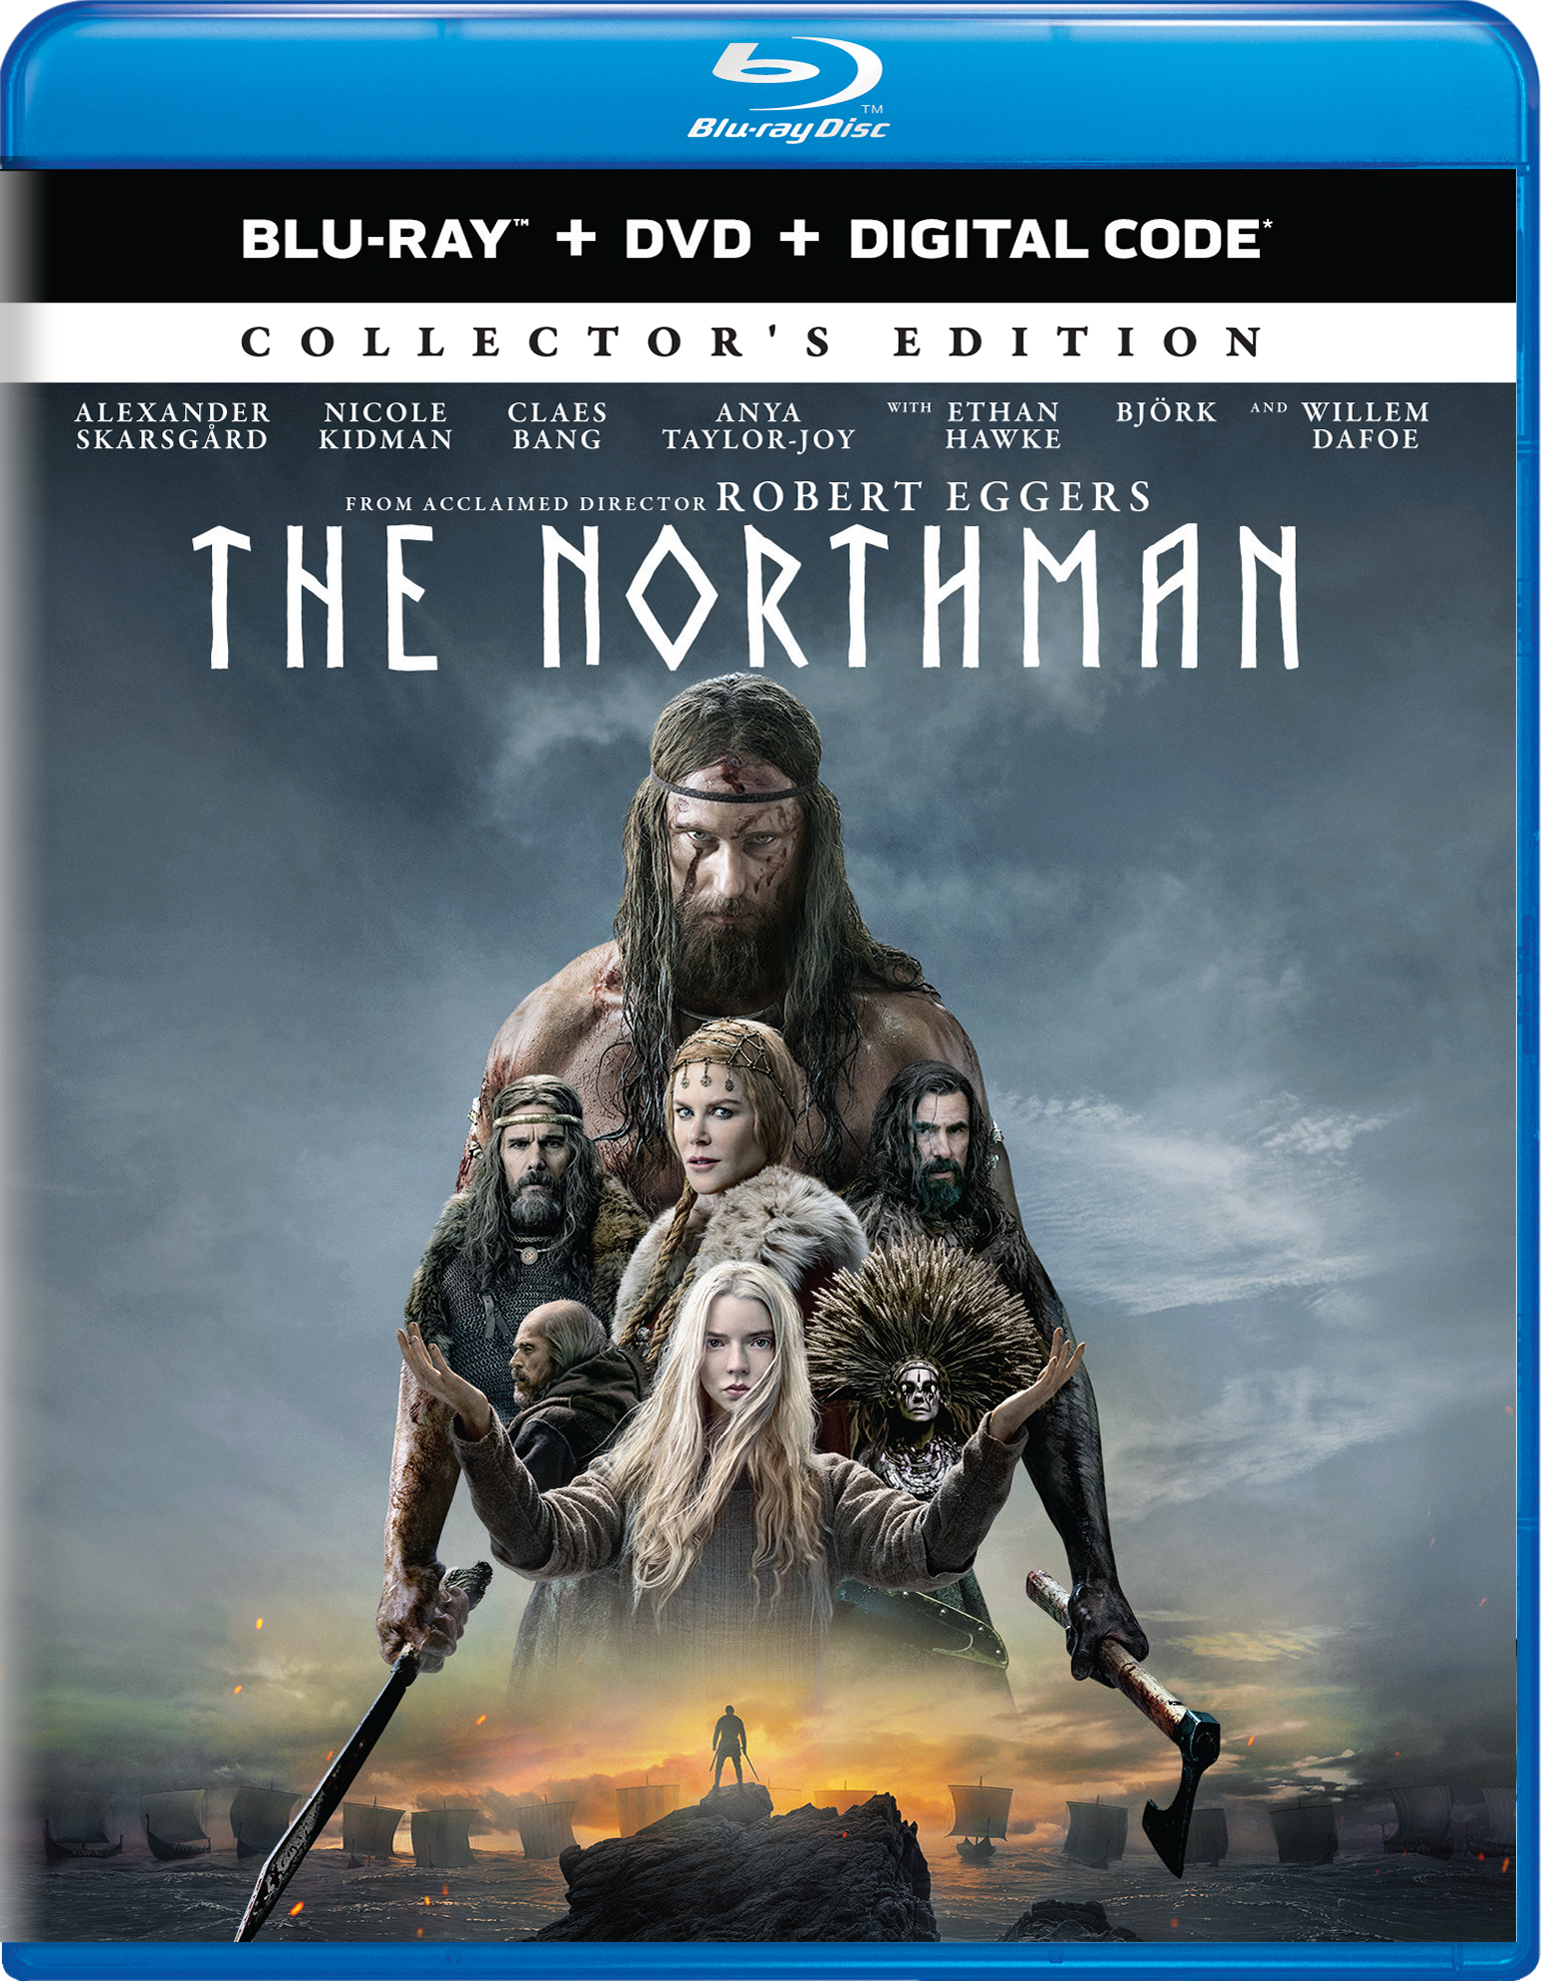 Best Buy: No Game, No Life the Movie: Zero [Blu-ray]